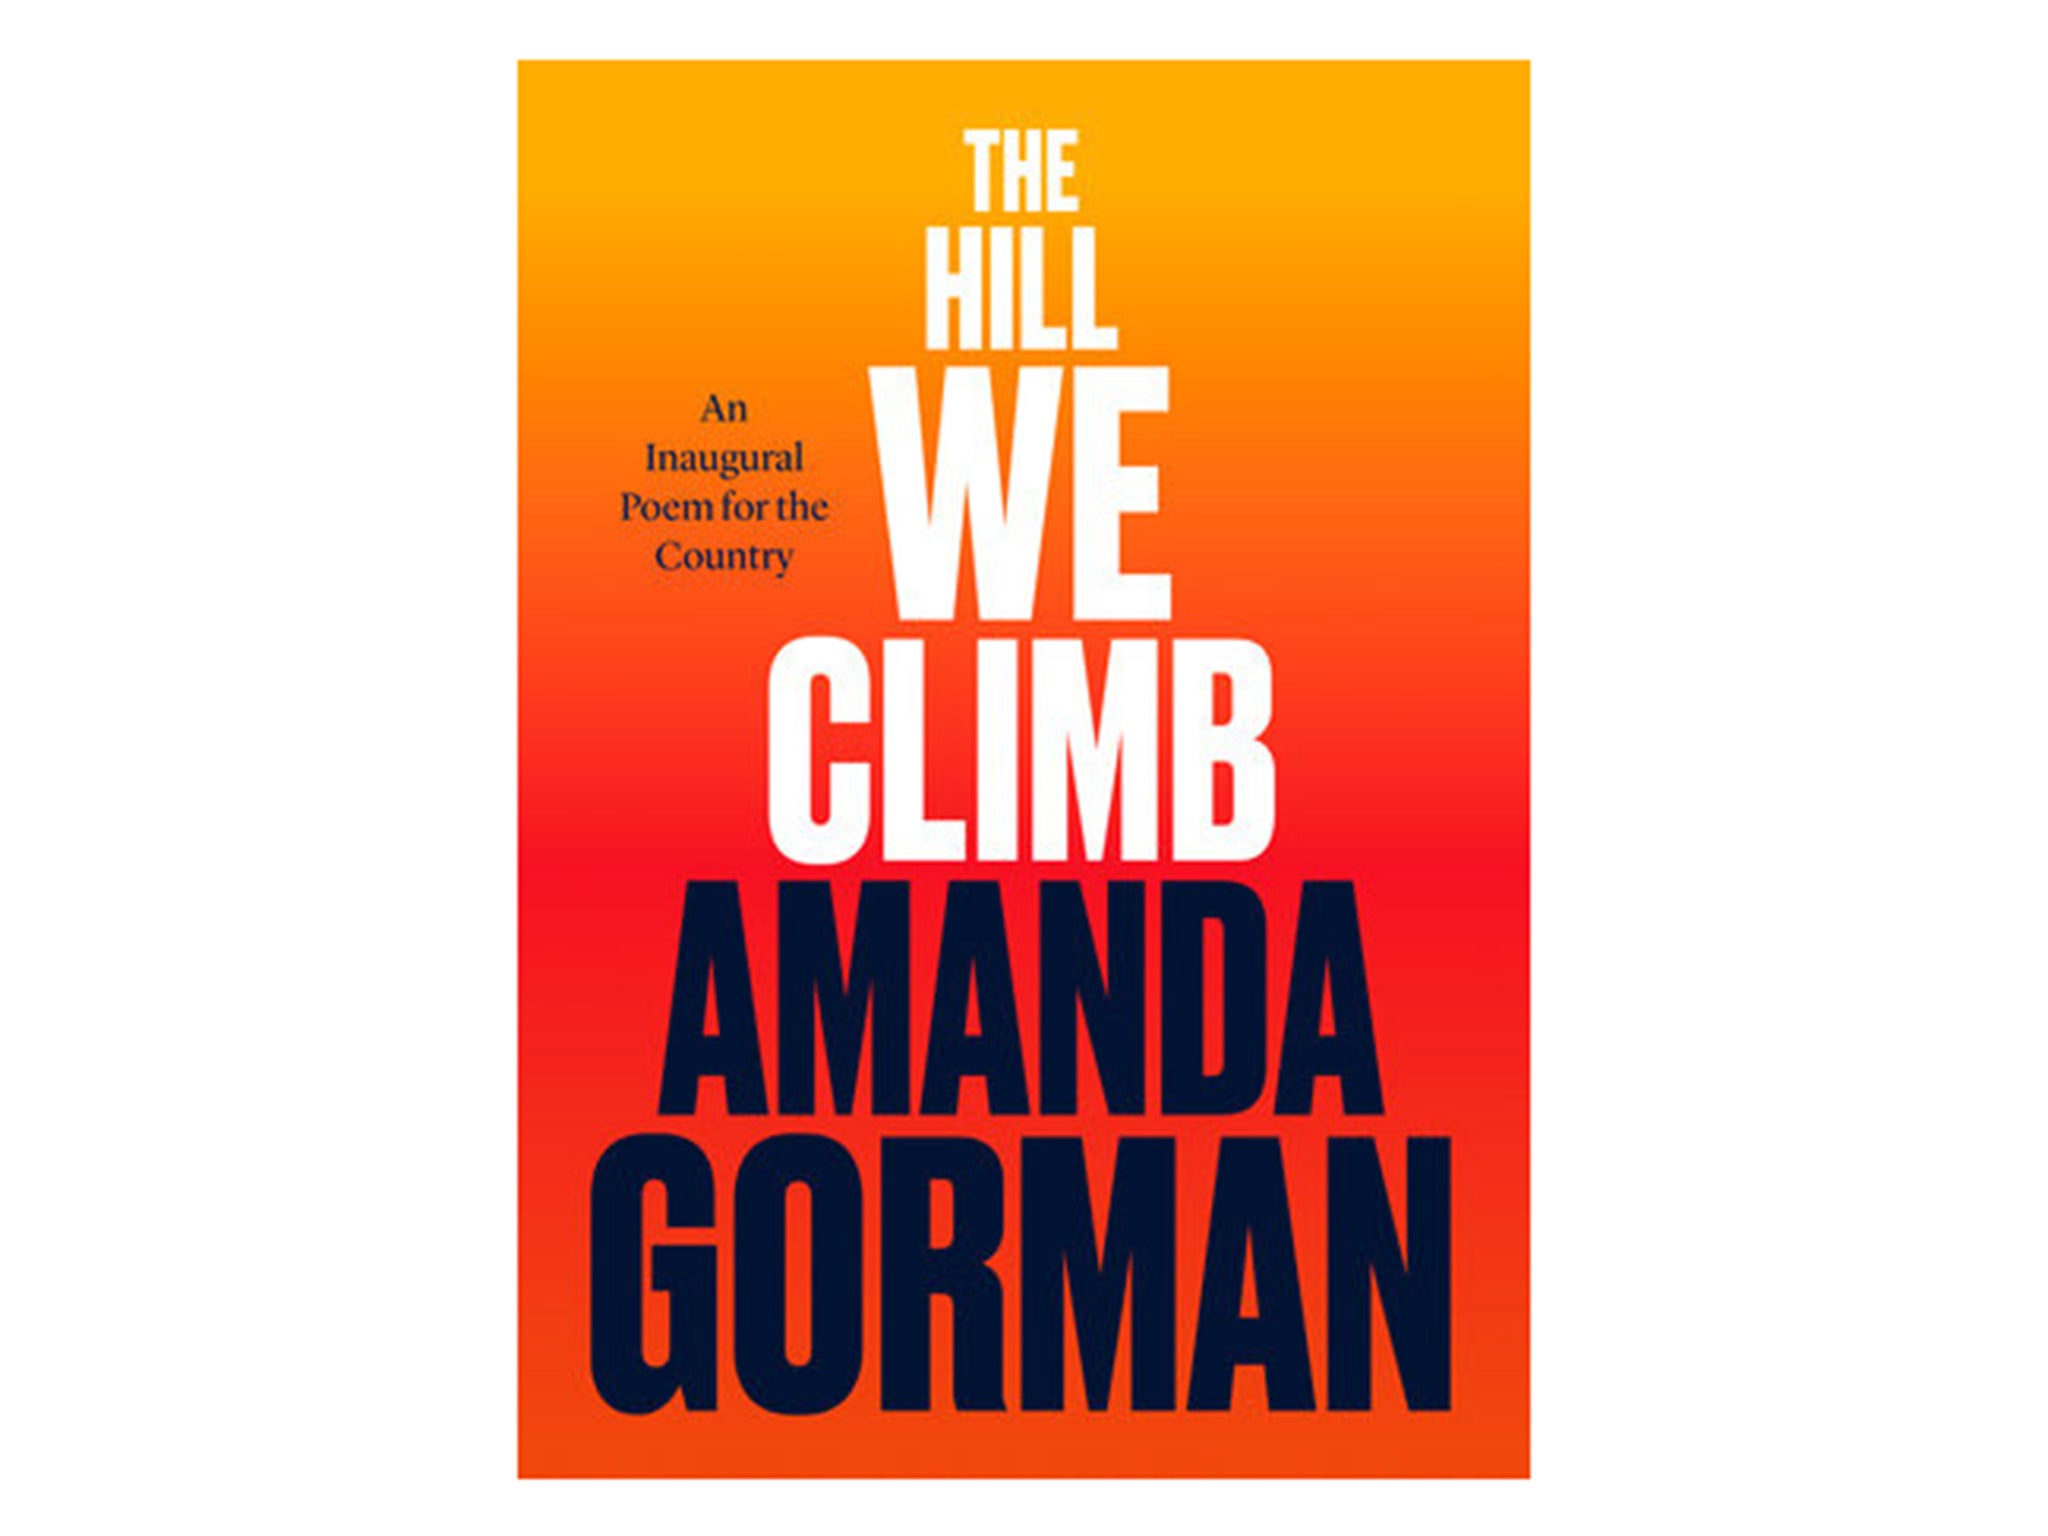 Amanda Gorman Book by University Press